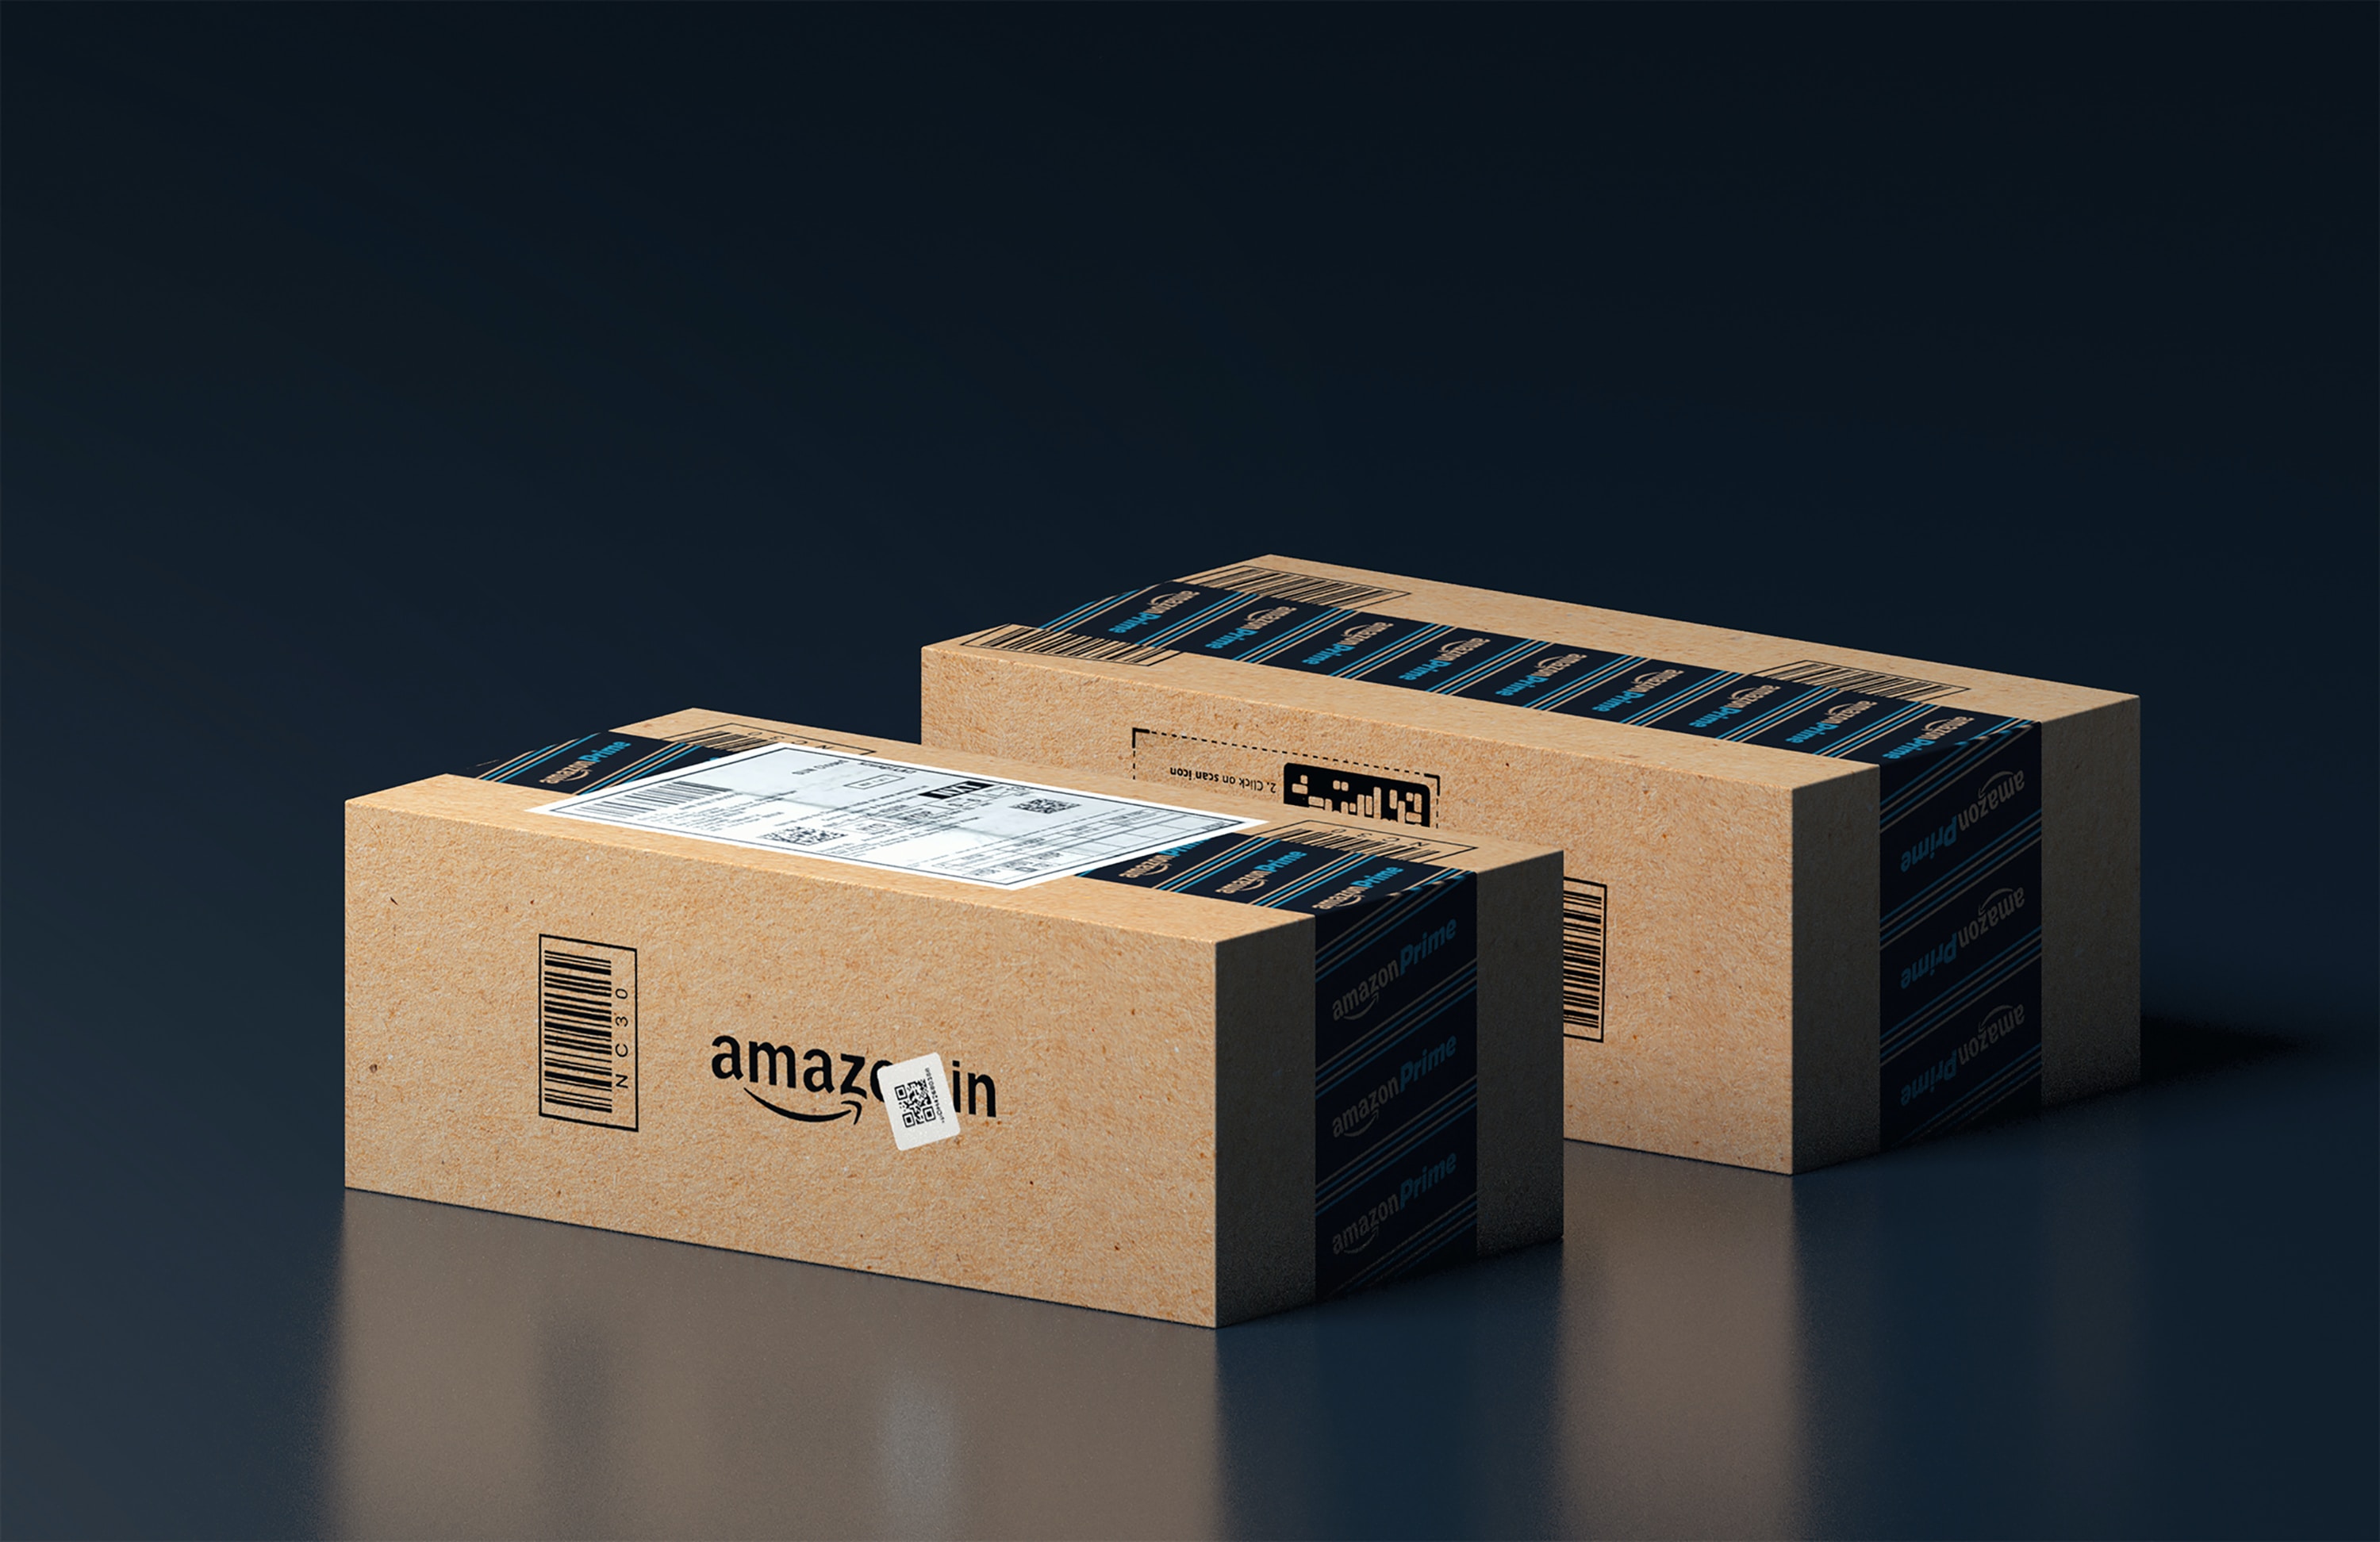 Apmefx | Amazon is crushing it